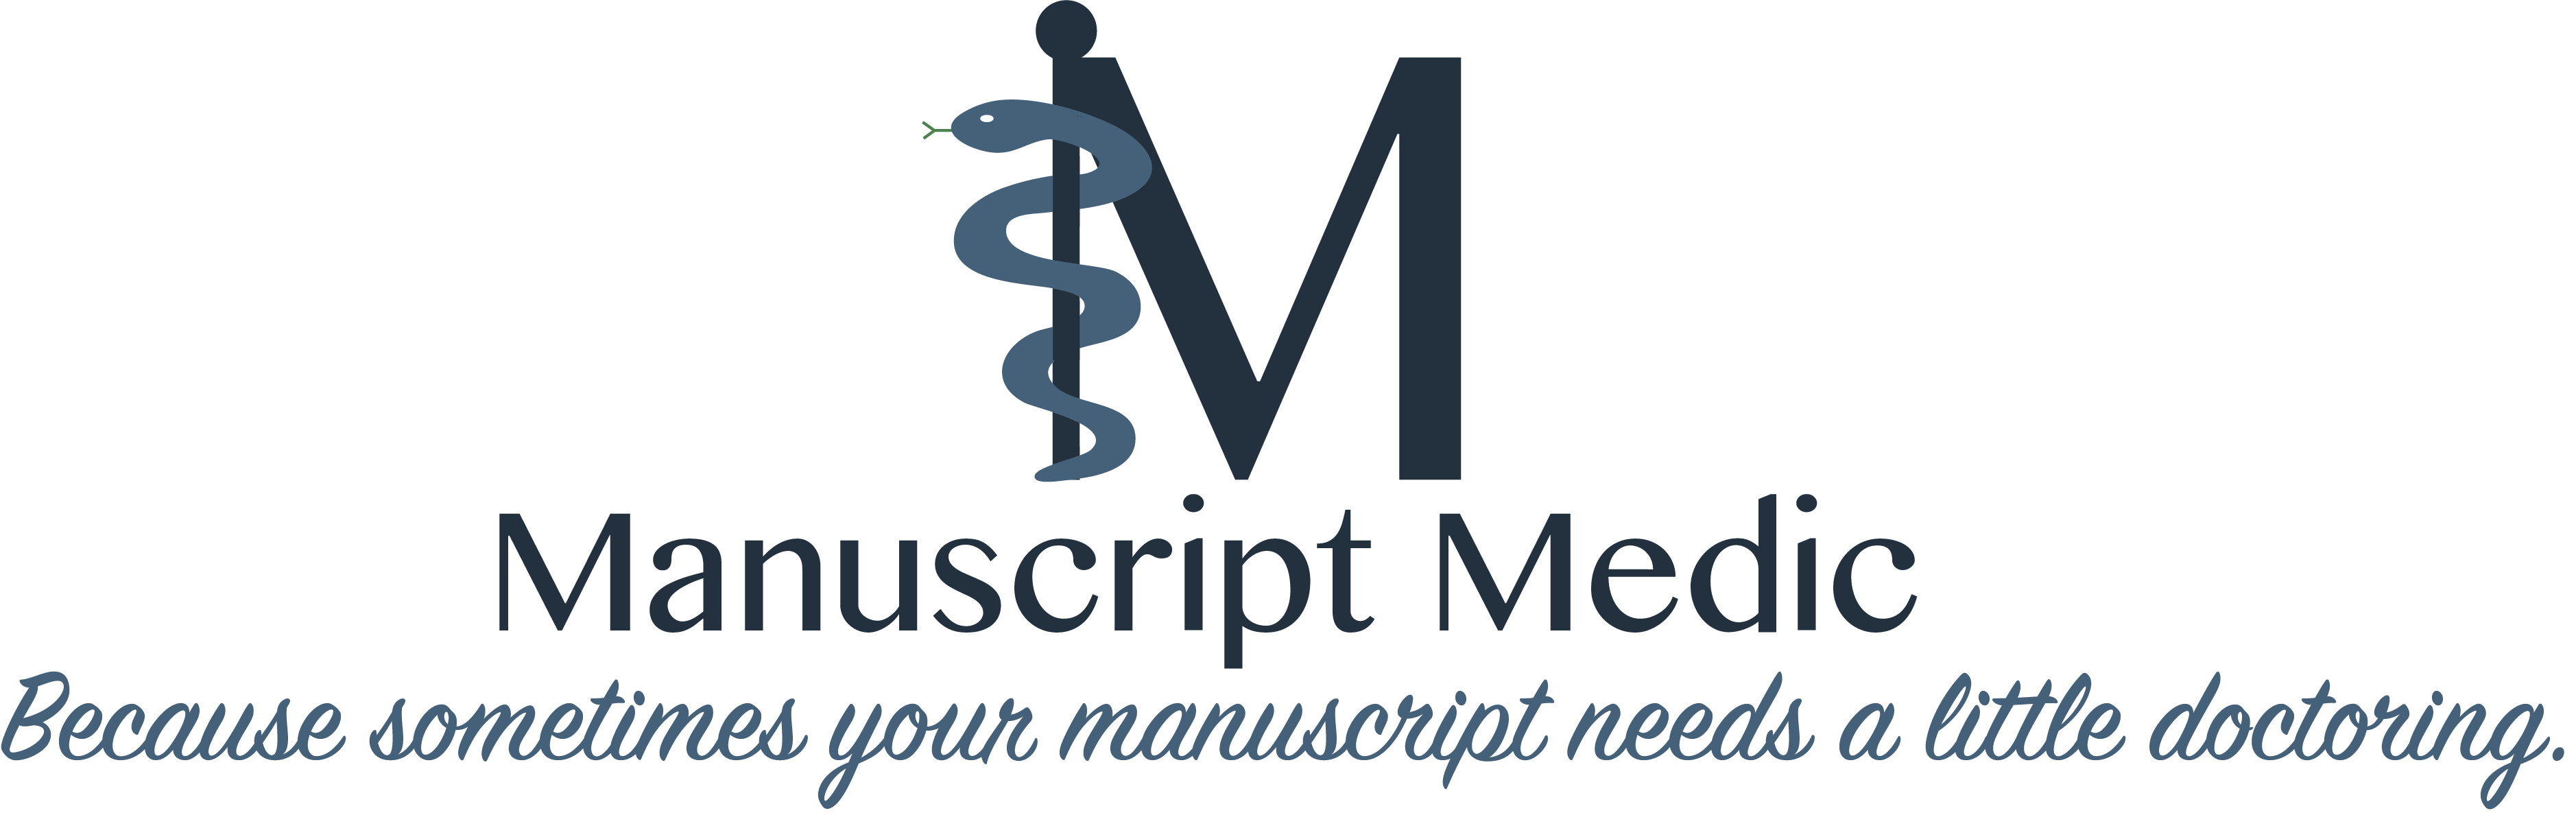 Manuscript Medic Because Sometimes Your Manuscript Needs A Little Doctoring